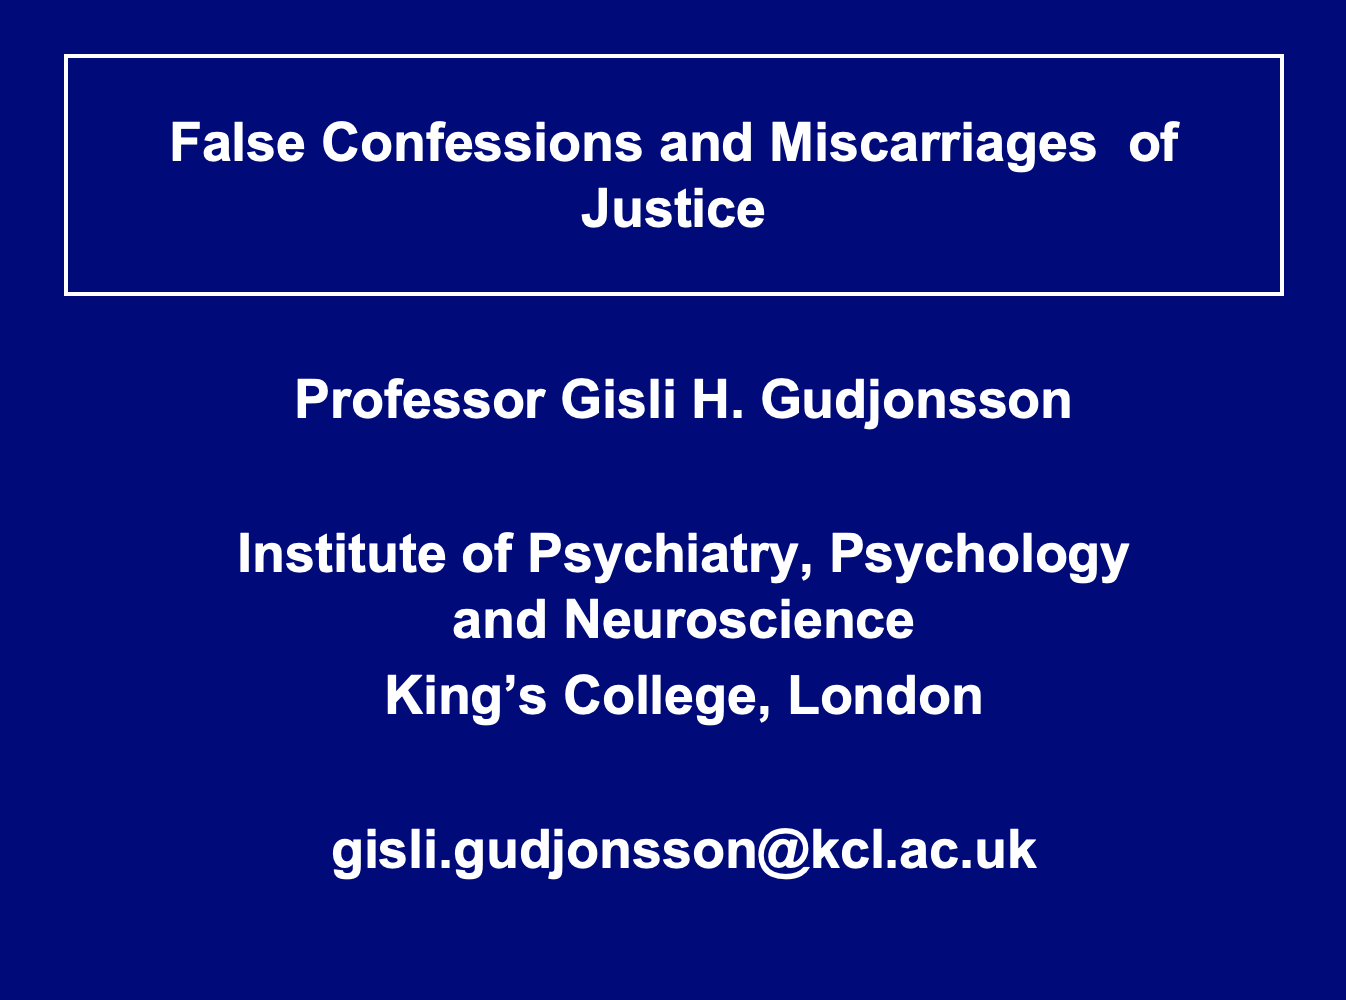 Talk by Professor Gisli Gudjonsson